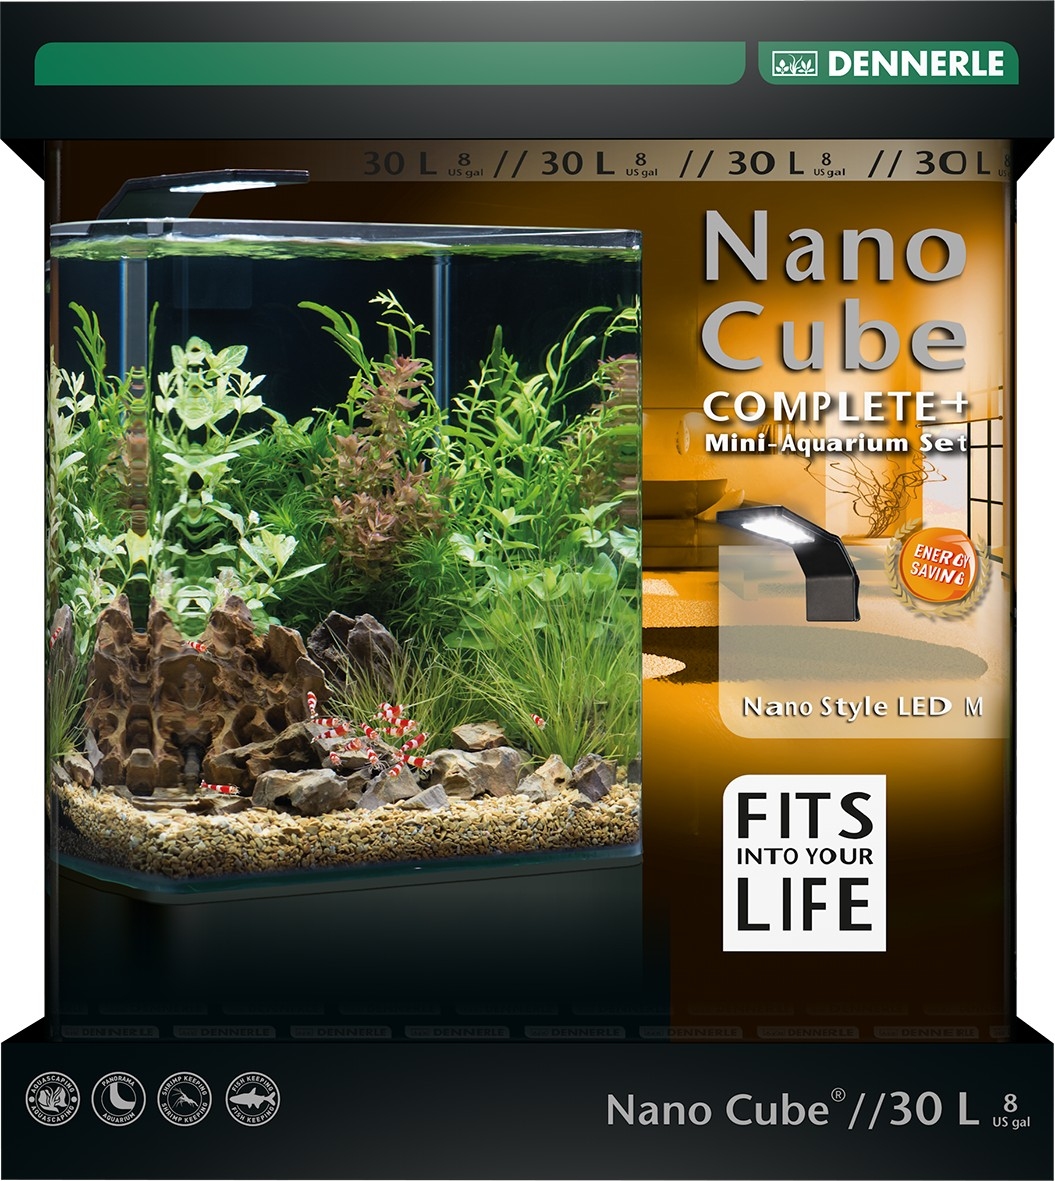 DENNERLE Nano Cube Complete+ 20 L nano-aquarium 25 x 25 x 30 cm